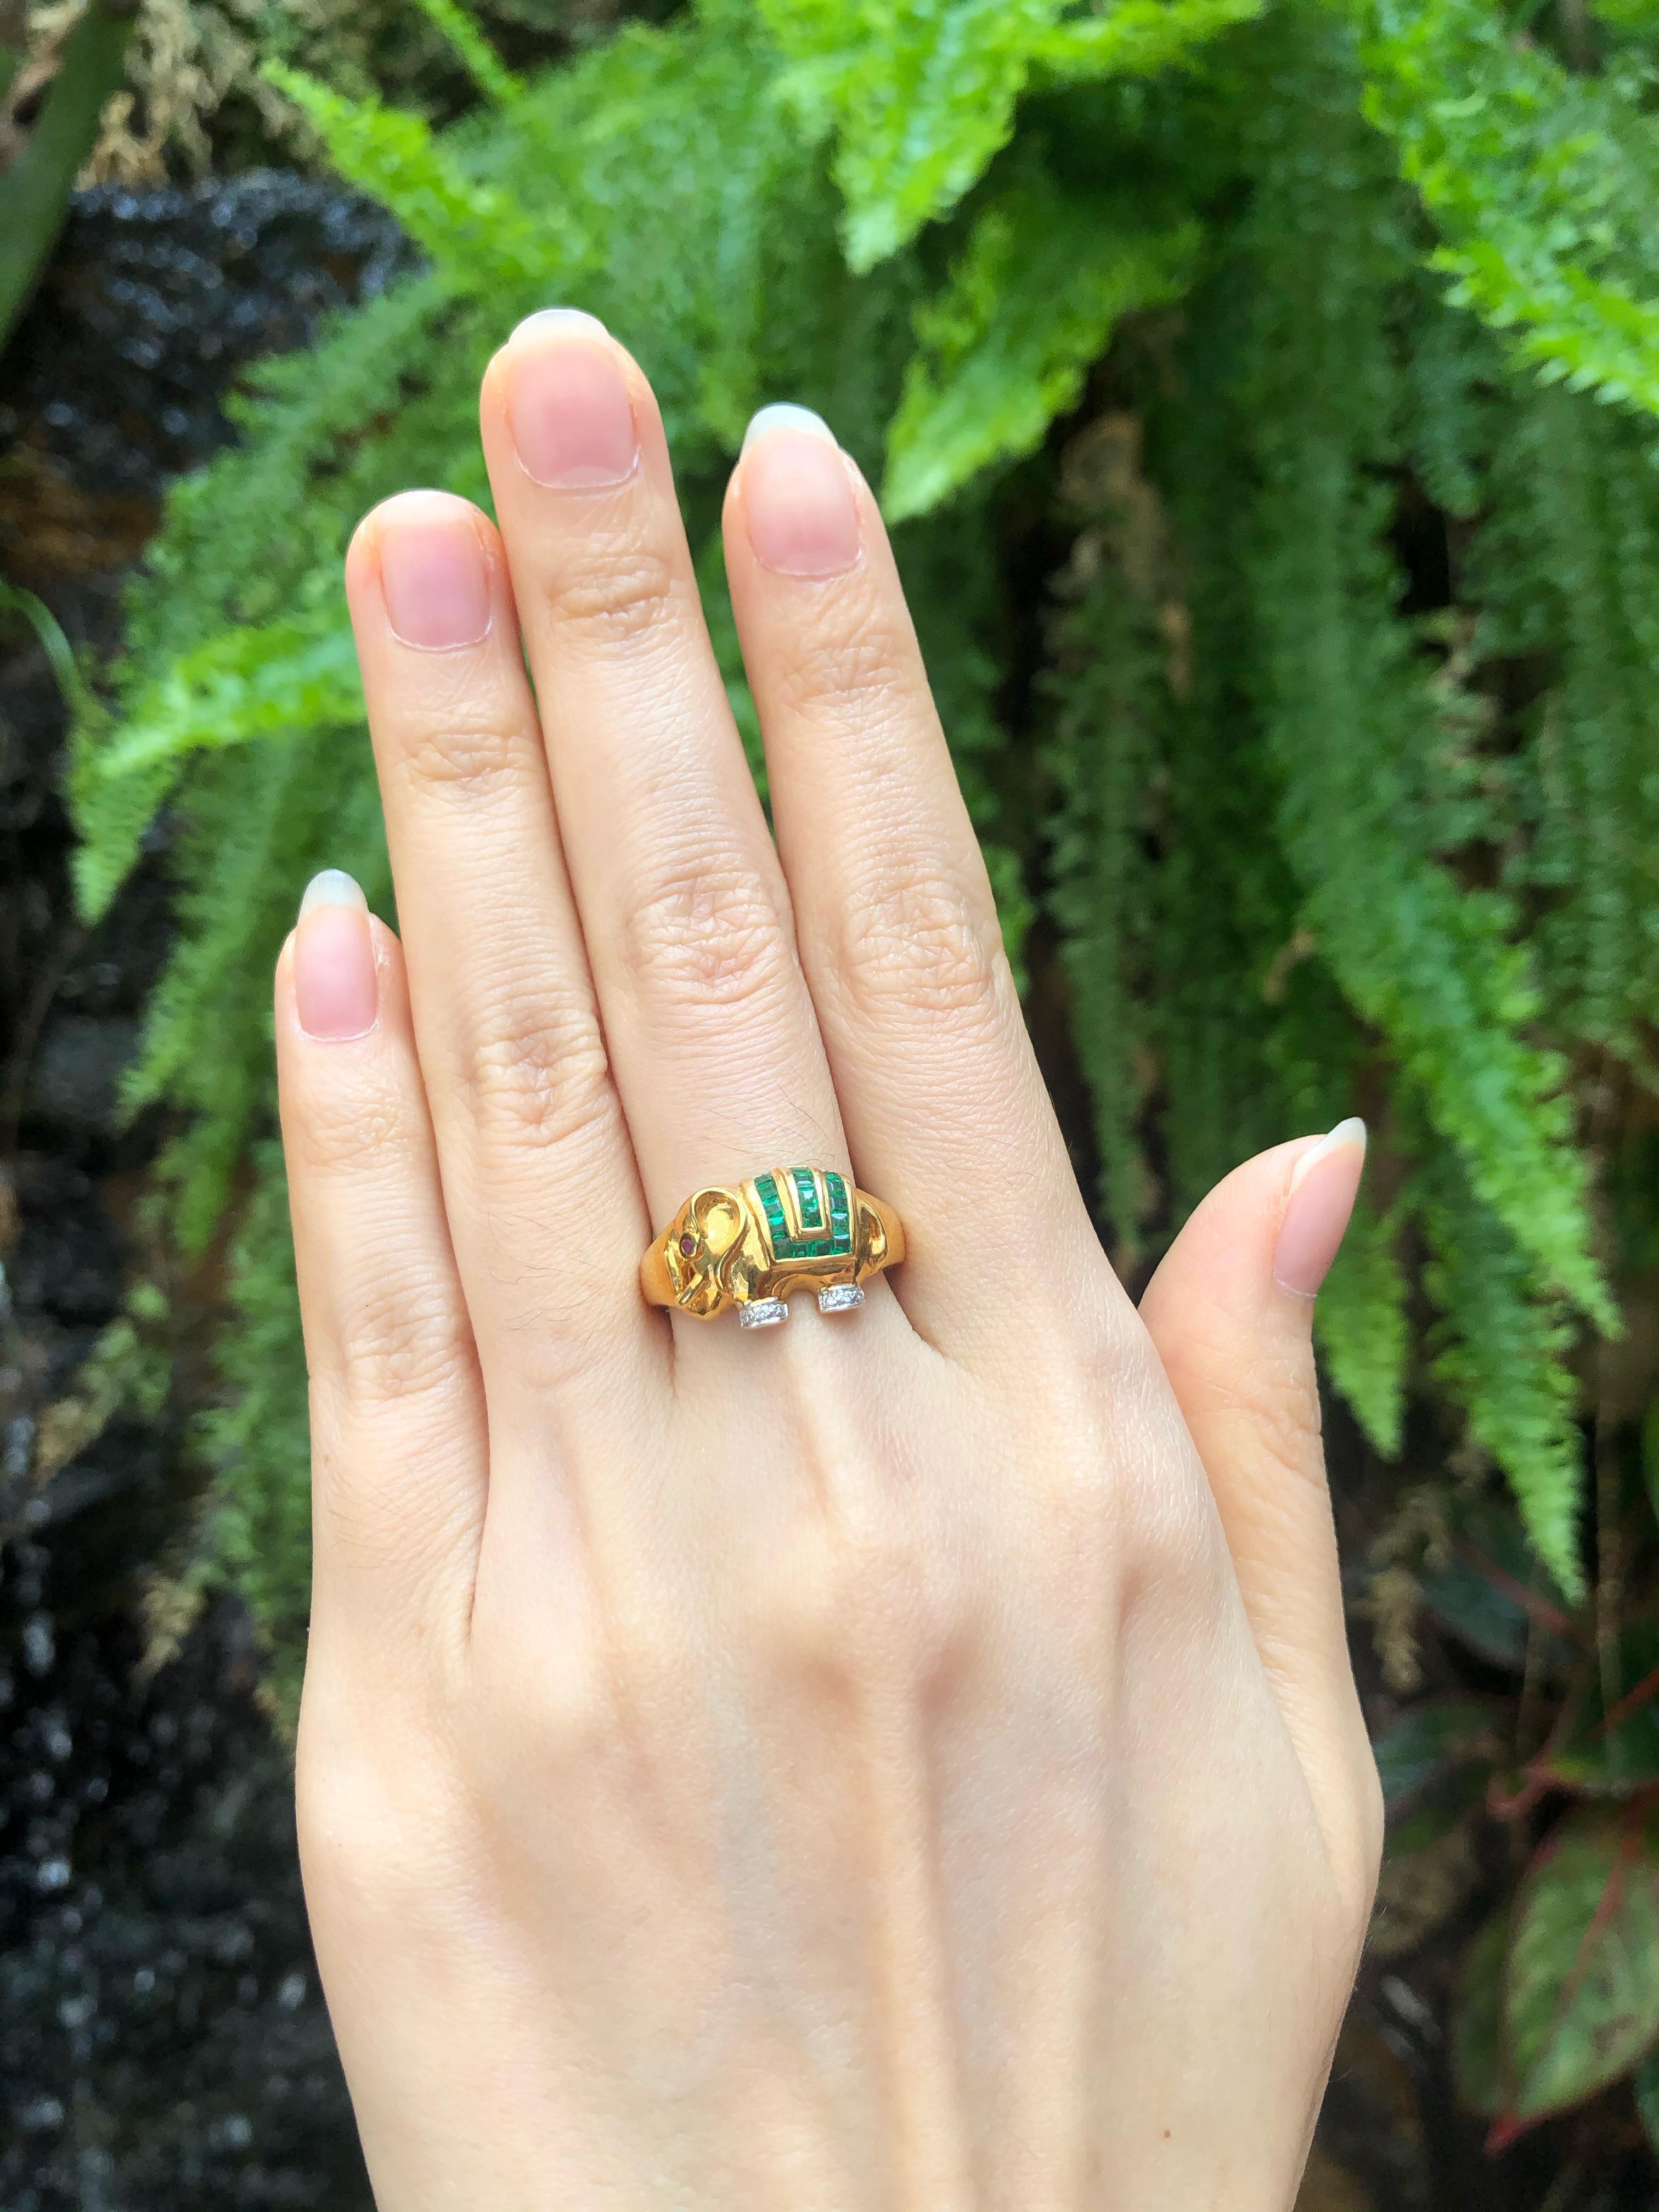 Emerald 0.39 carat with Diamond 0.02 carat Ring set in 18 Karat Gold Settings

Width: 1.3 cm
Length: 1.2 cm 
Ring Size: 57

